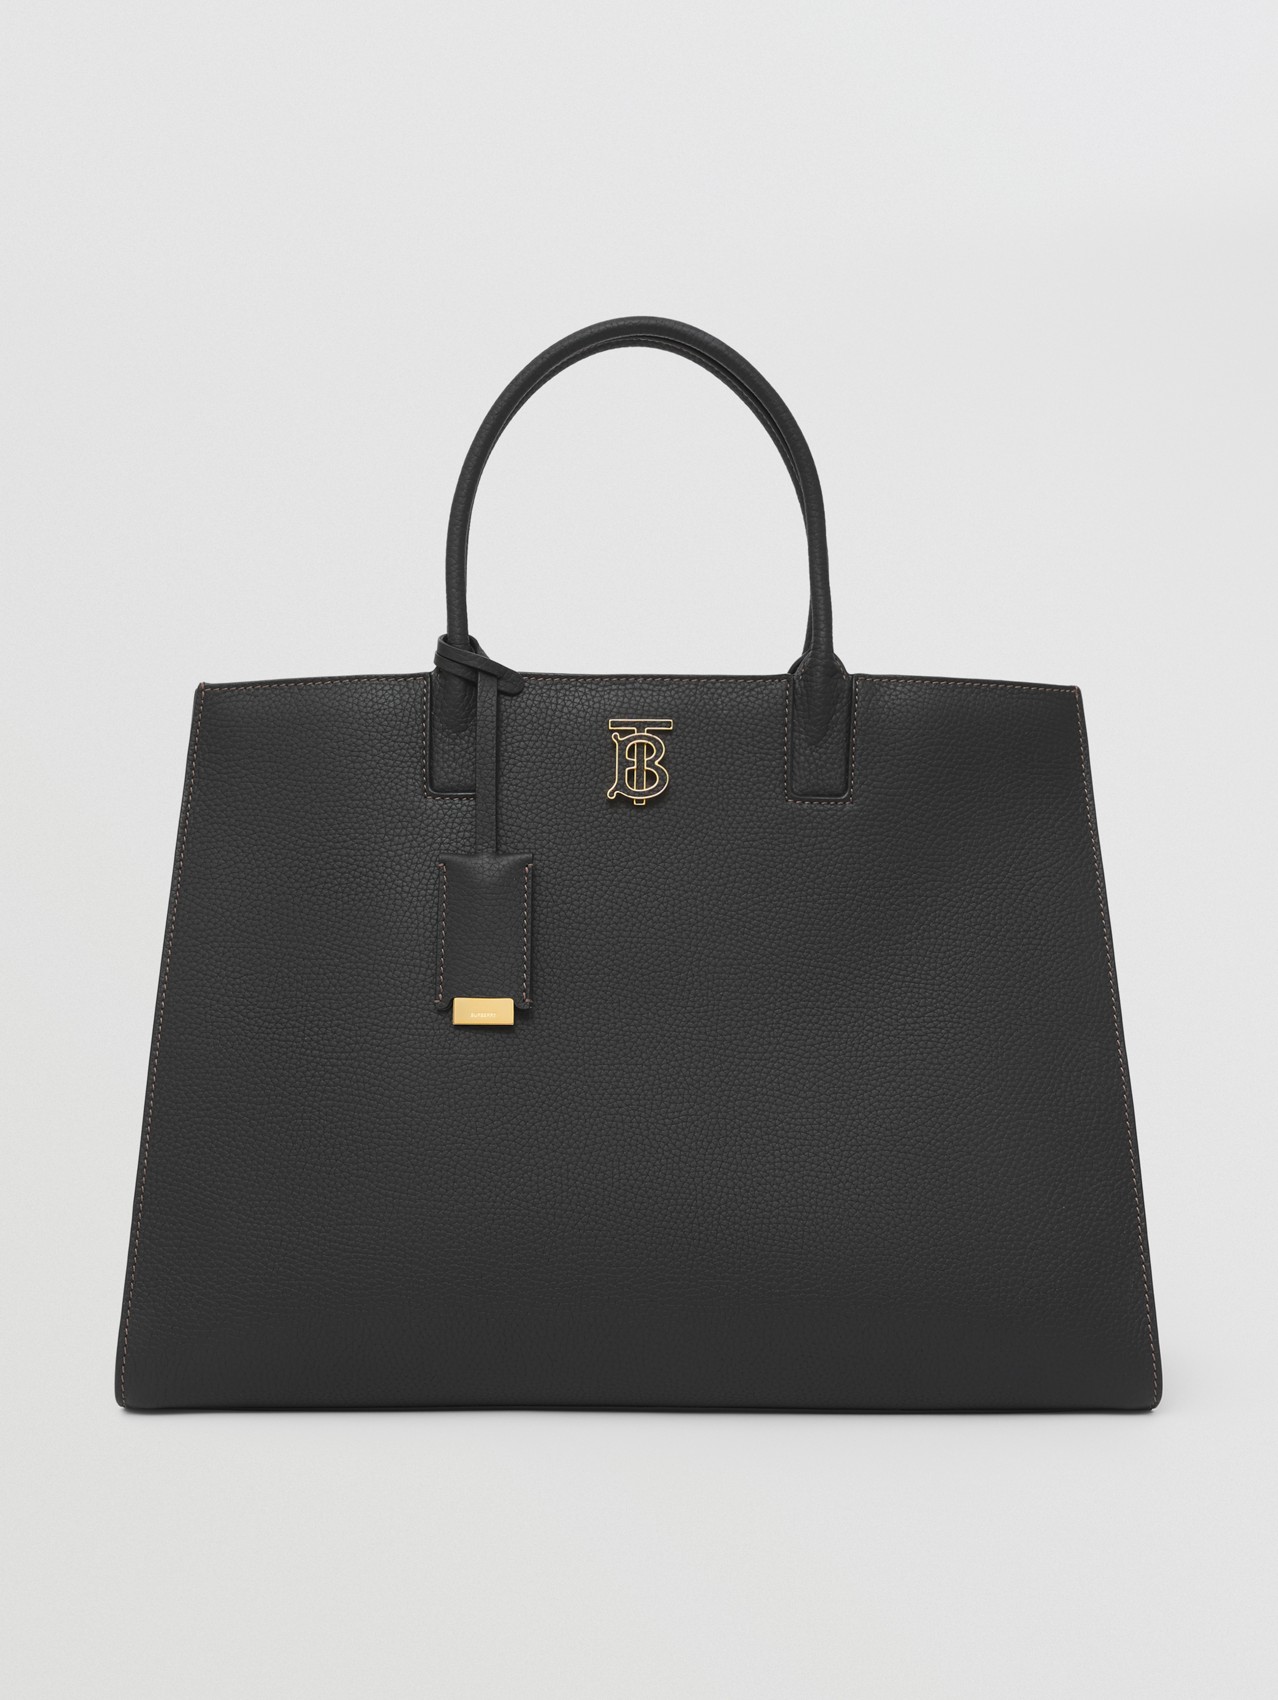 Medium Grainy Leather Frances Bag in Black